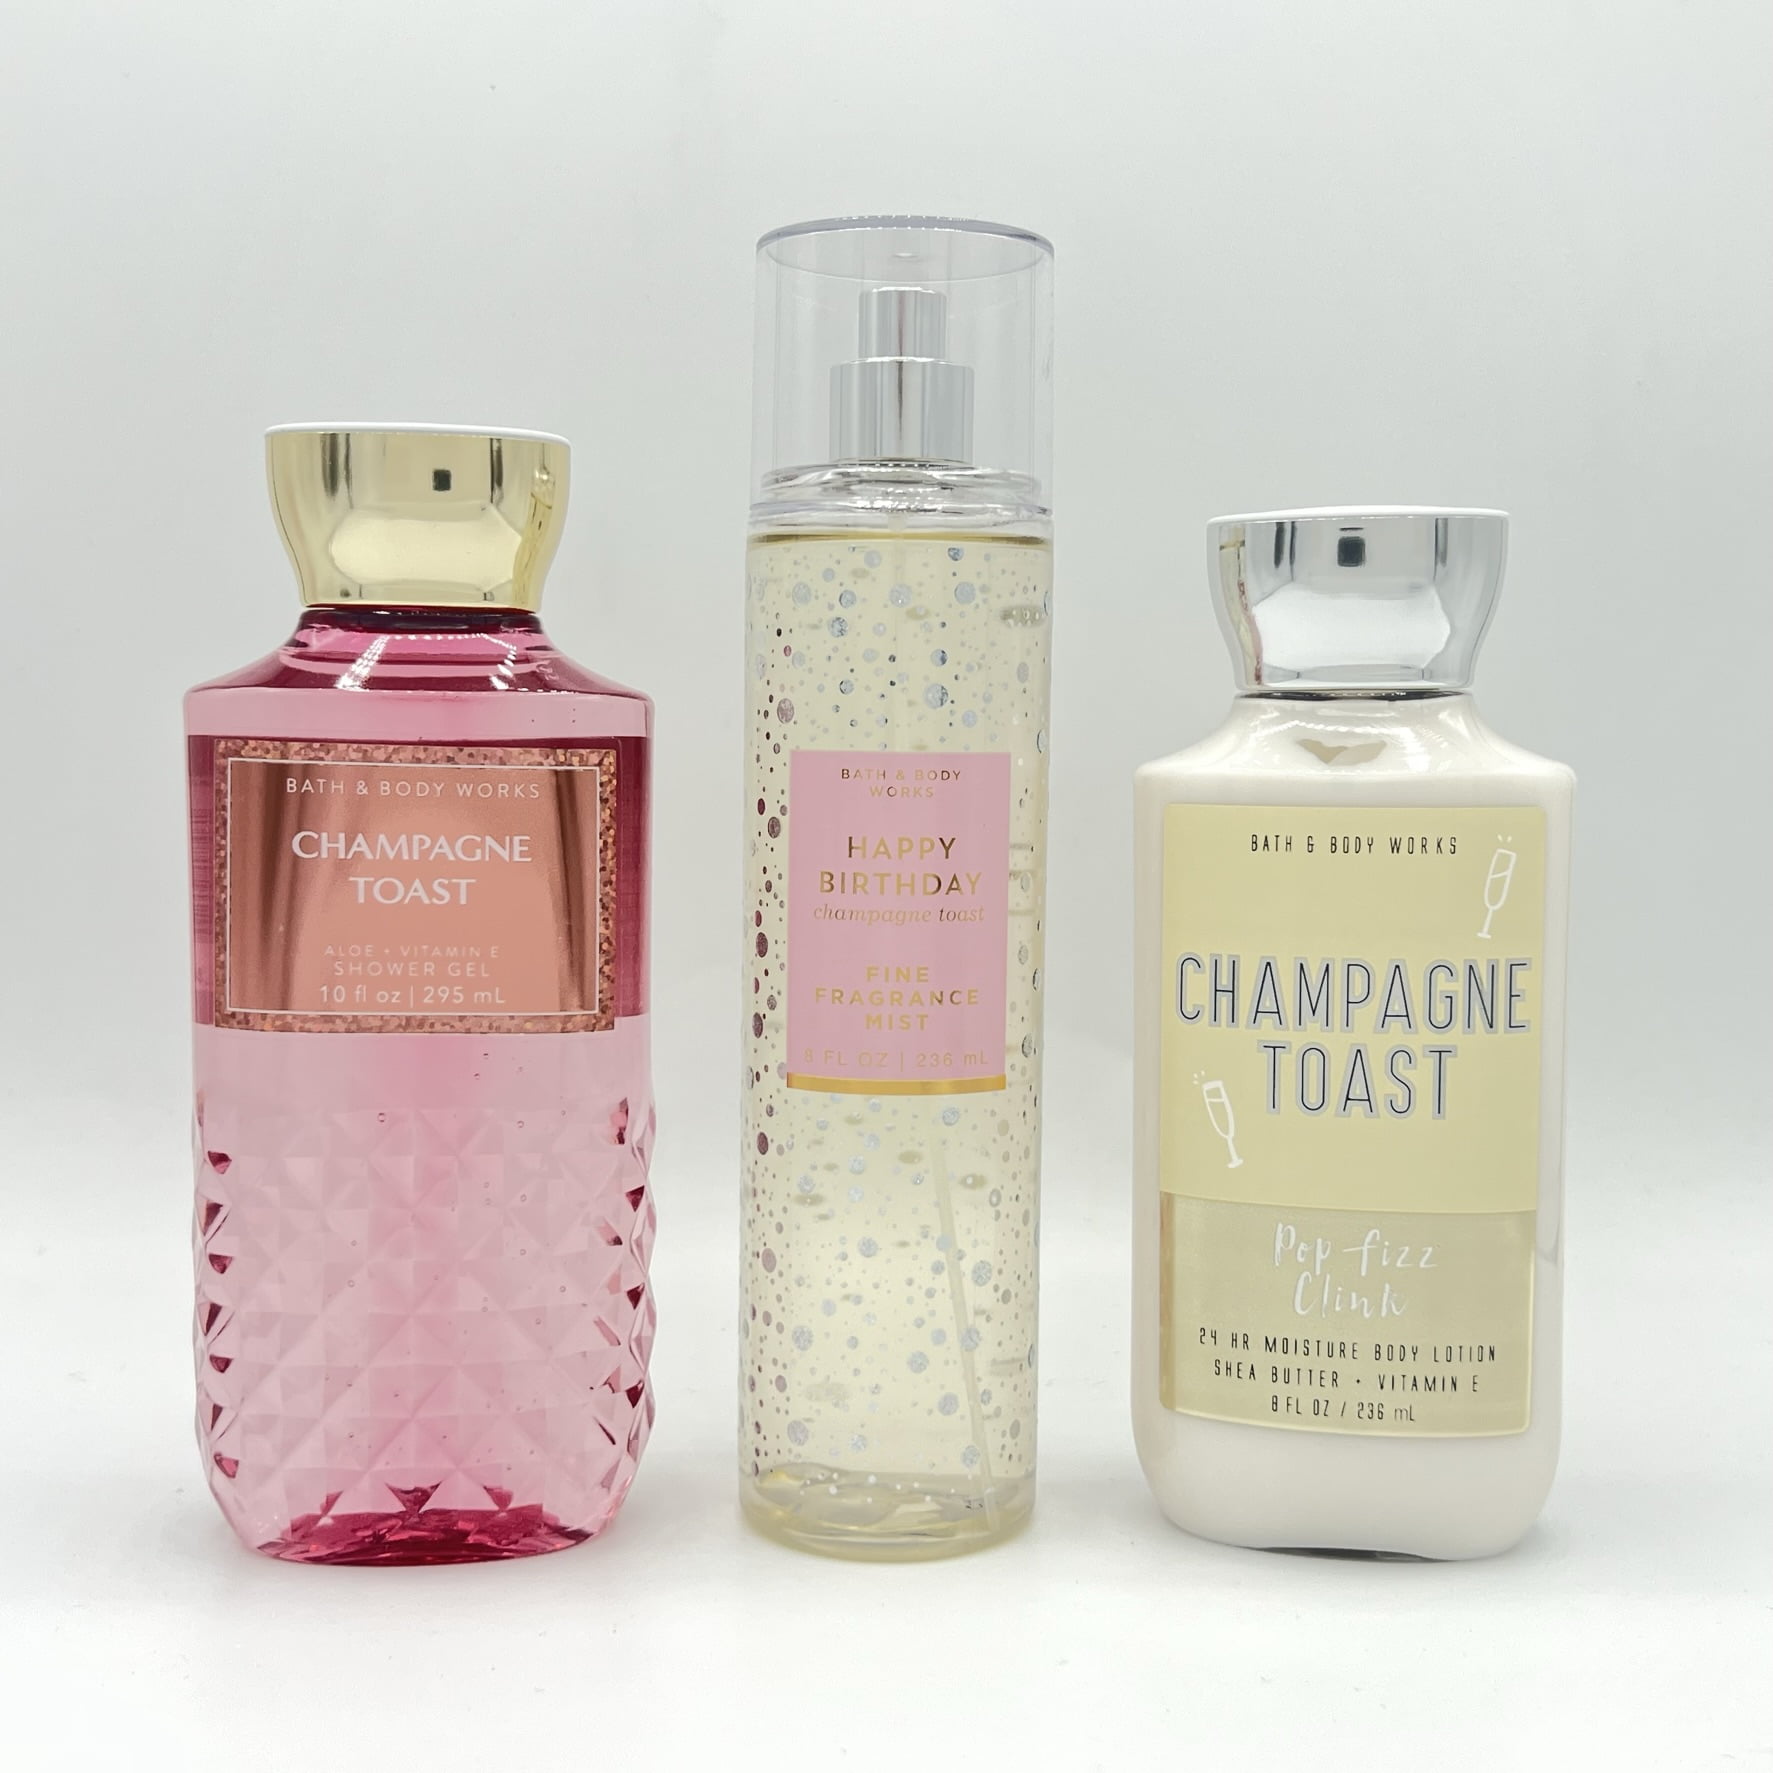 Bath & Body Works CHAMPAGNE TOAST Fragrance Mist & Body Lotion Set of 2 New